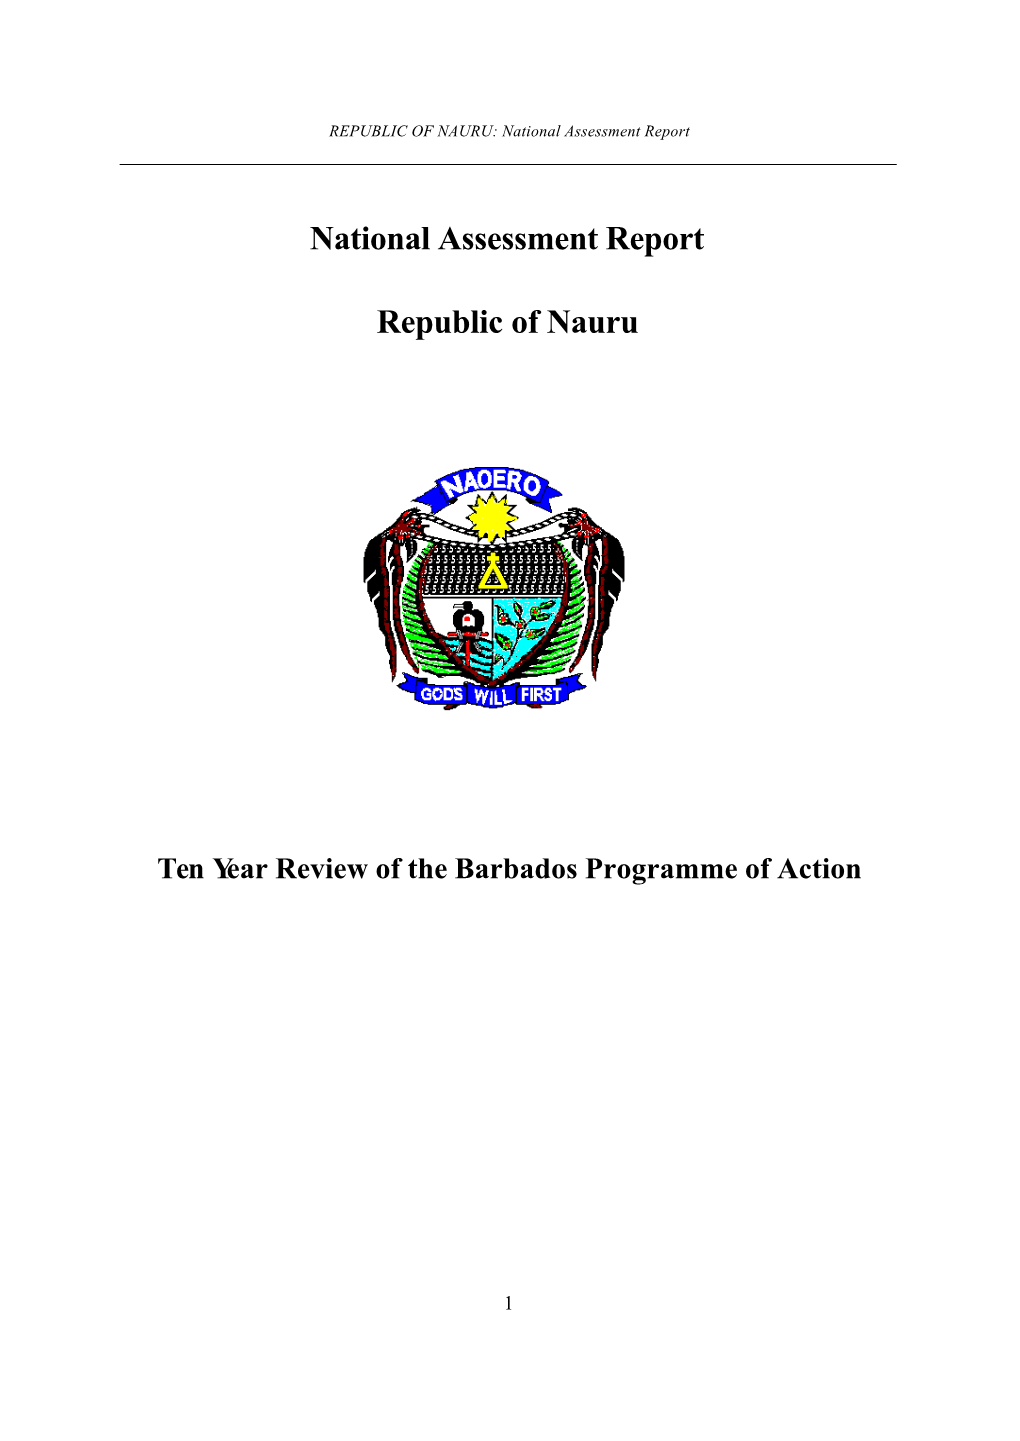 NAURU: National Assessment Report